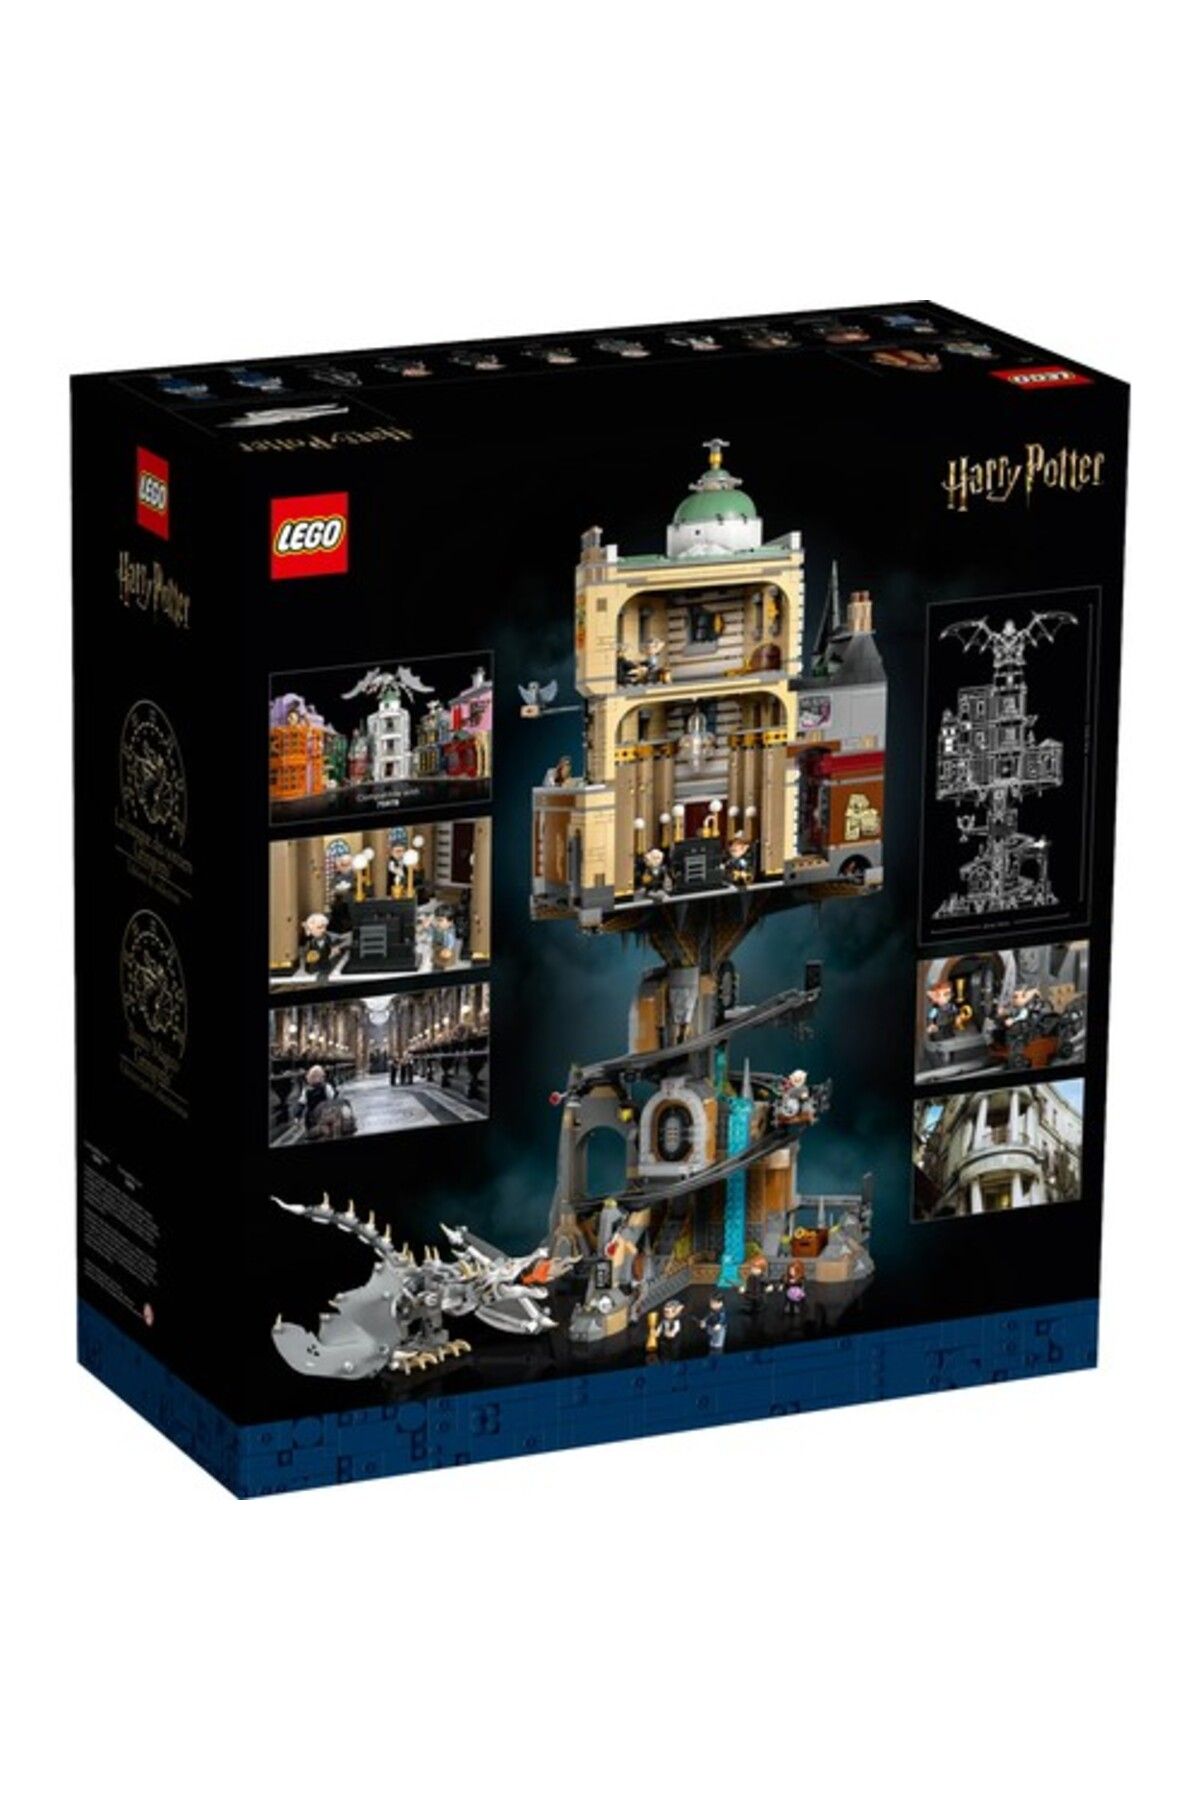 LEGO لگو بانک جادوگر هری پاتر 76417 گریگوتس – نسخه کلکسیونر (4803 ParÇa)